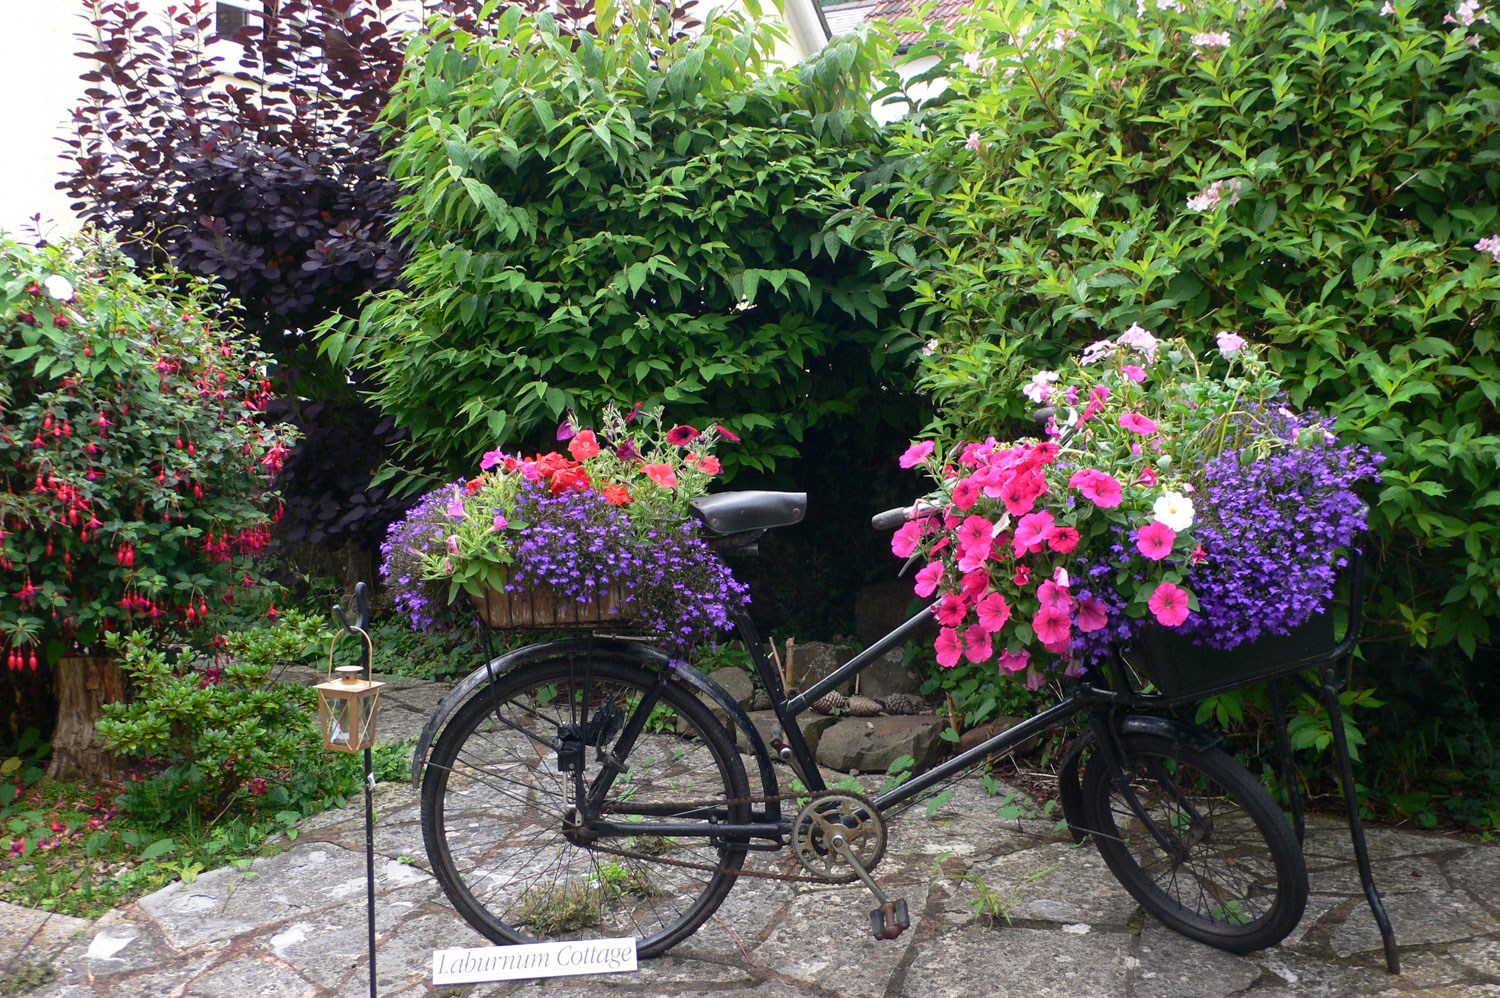 Floral displays in a garden in Dunster